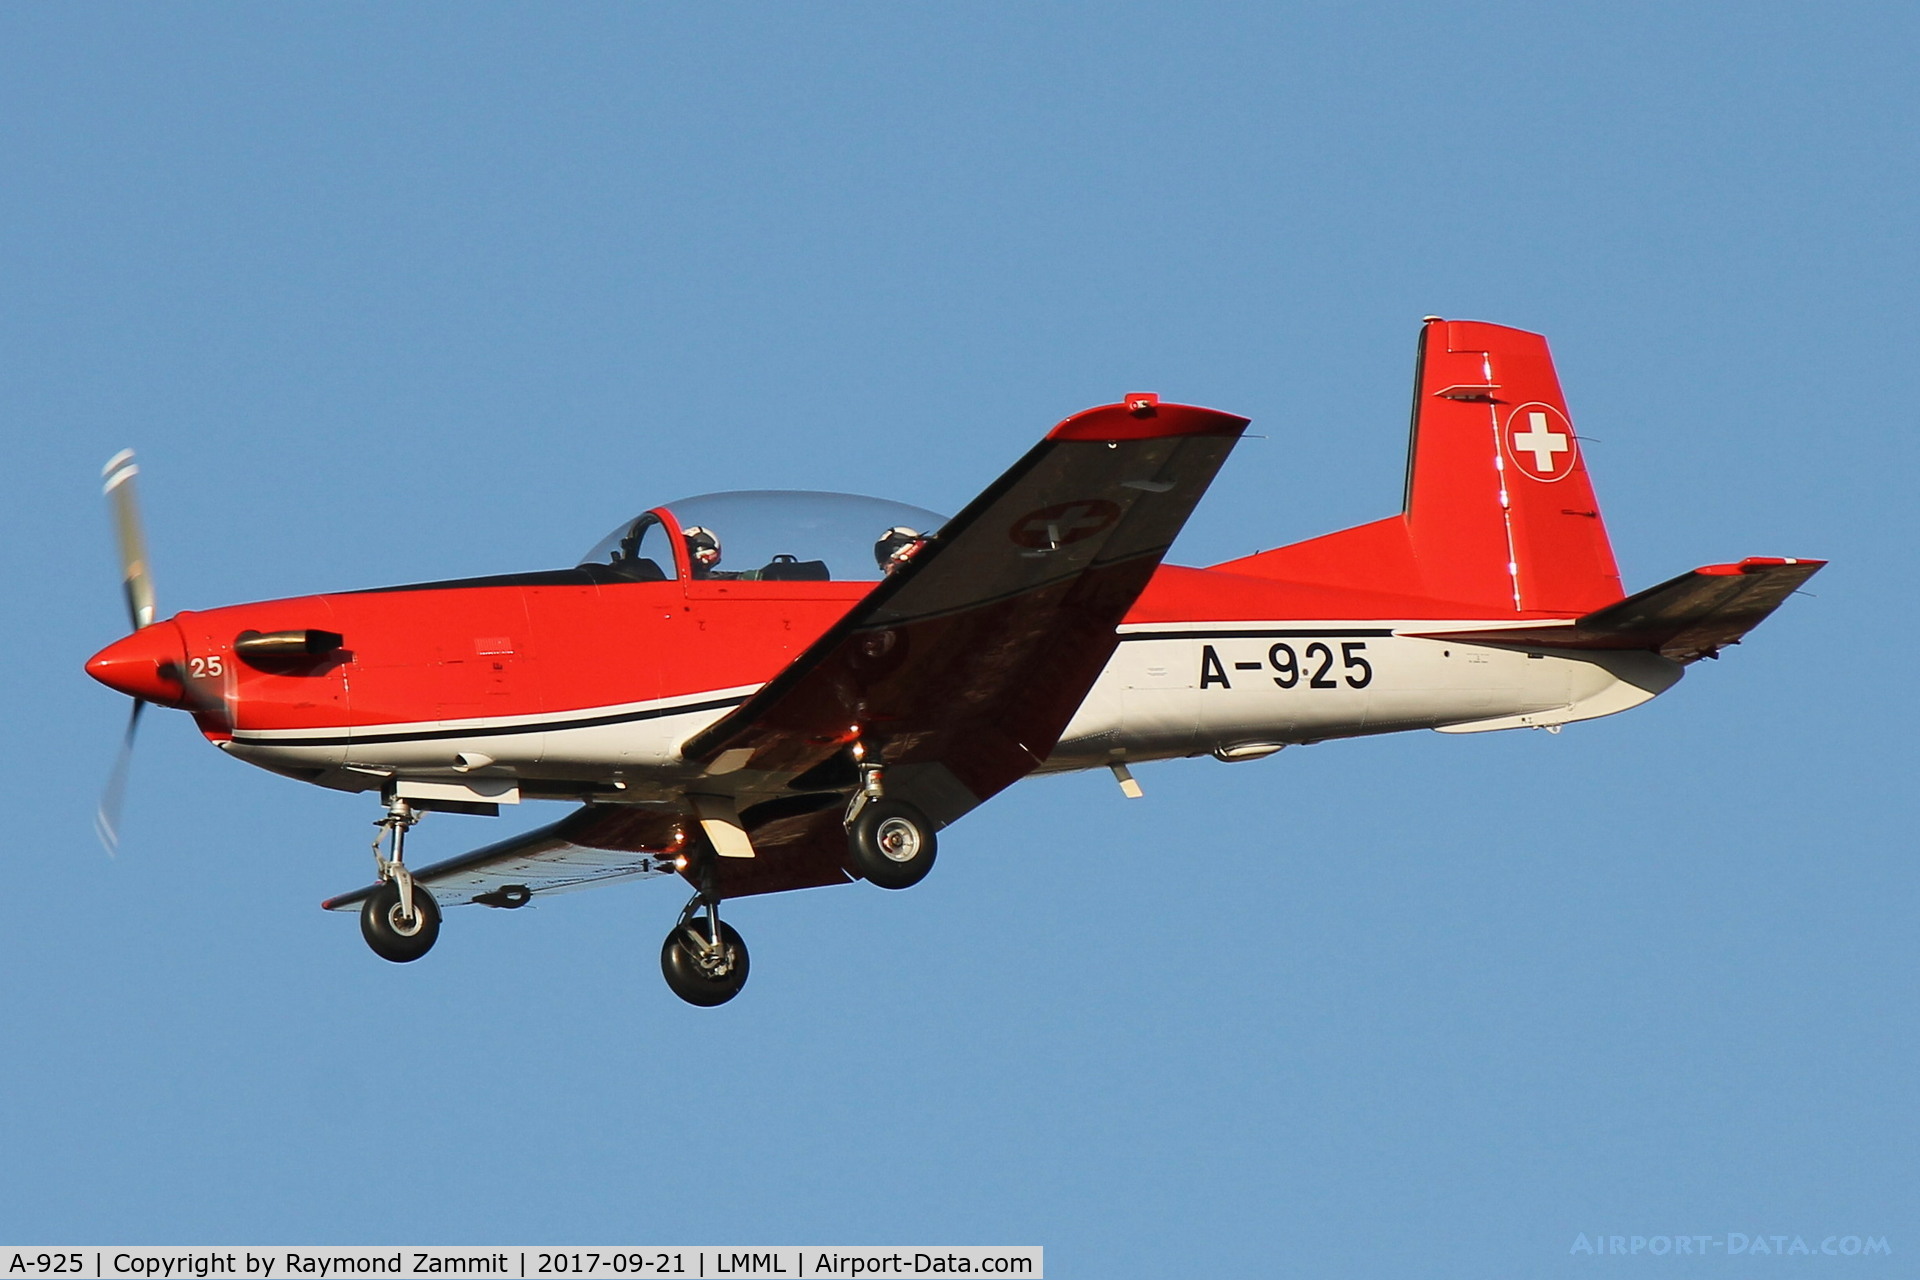 A-925, 1983 Pilatus PC-7 Turbo Trainer C/N 333, Pilatus PC-7 A-925 Swiss Air Force